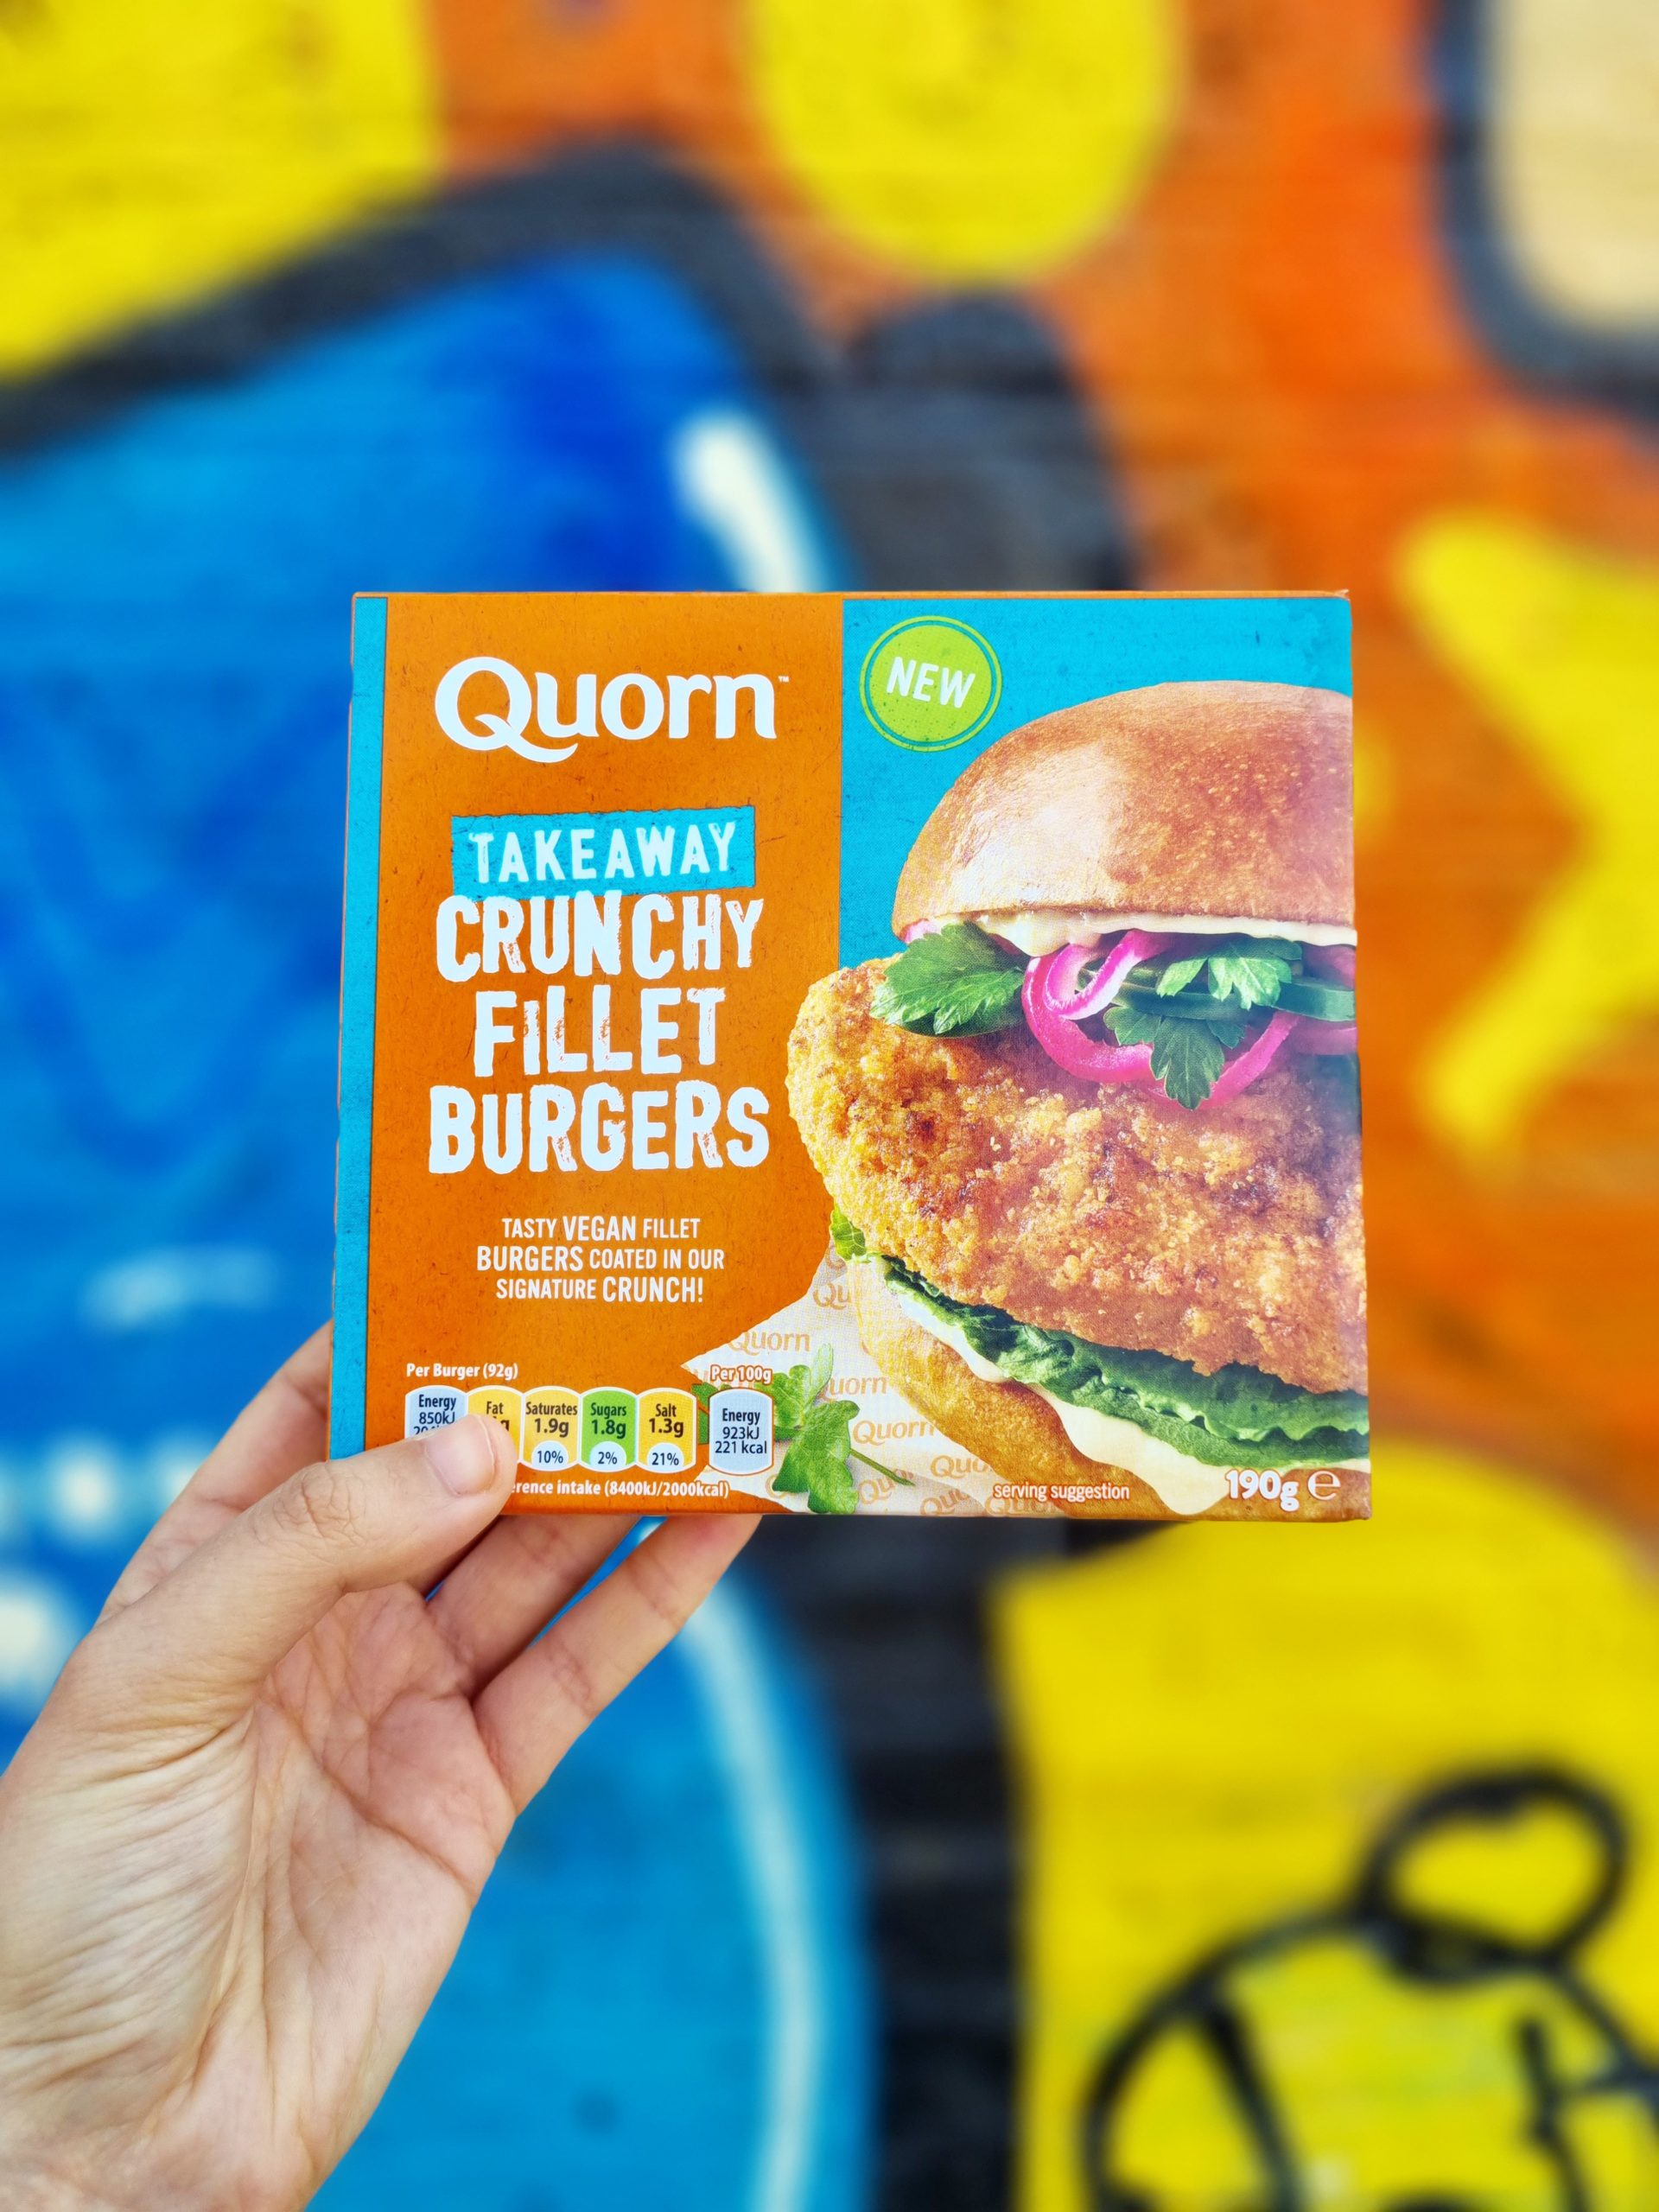 <img src="quorn.jpg" alt="quorn vegan fillet burger box"/> 